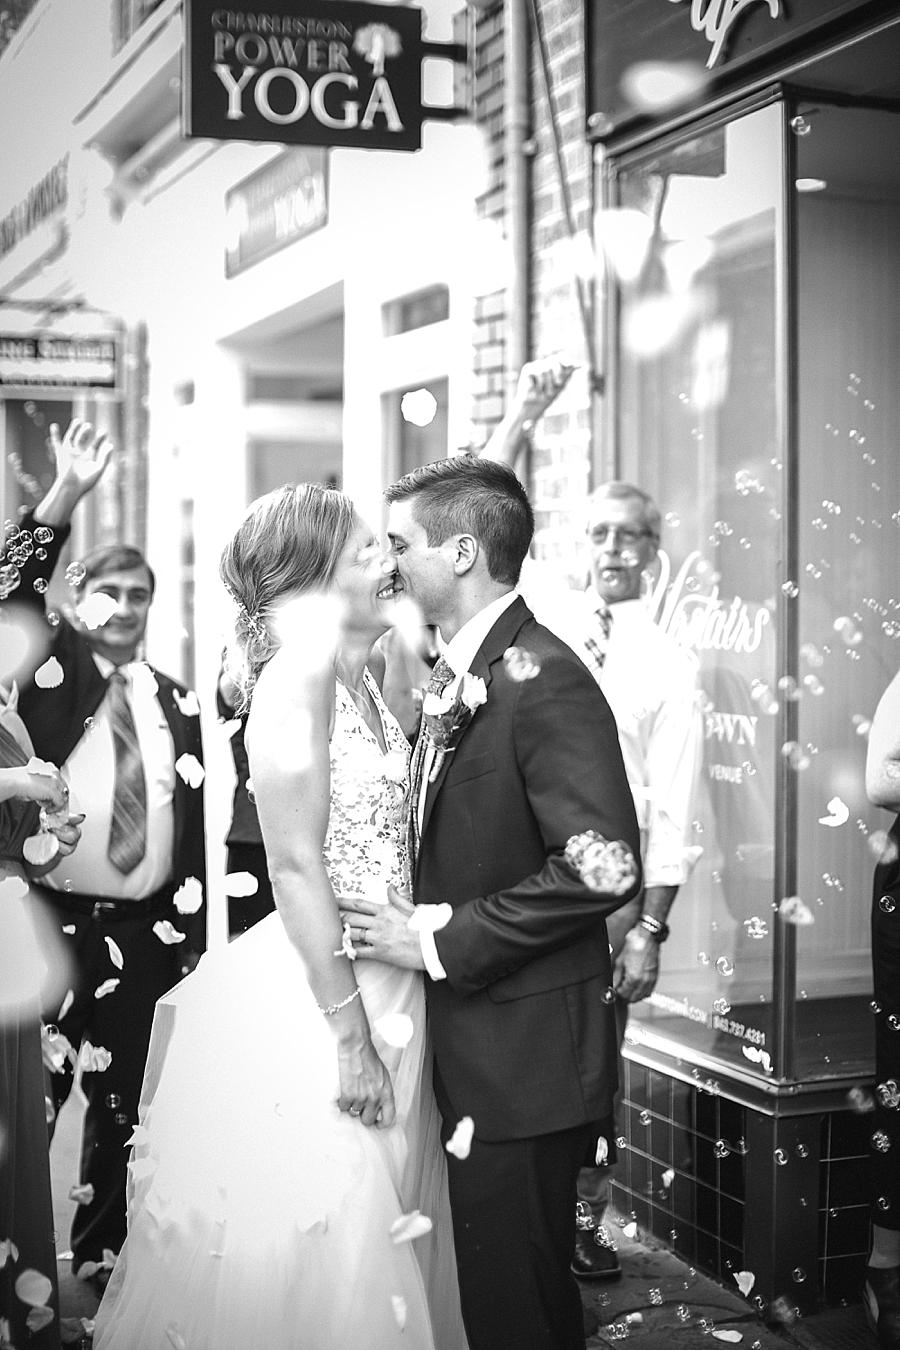 Bubbles at this Upstairs at Midtown Wedding by Knoxville Wedding Photographer, Amanda May Photos.